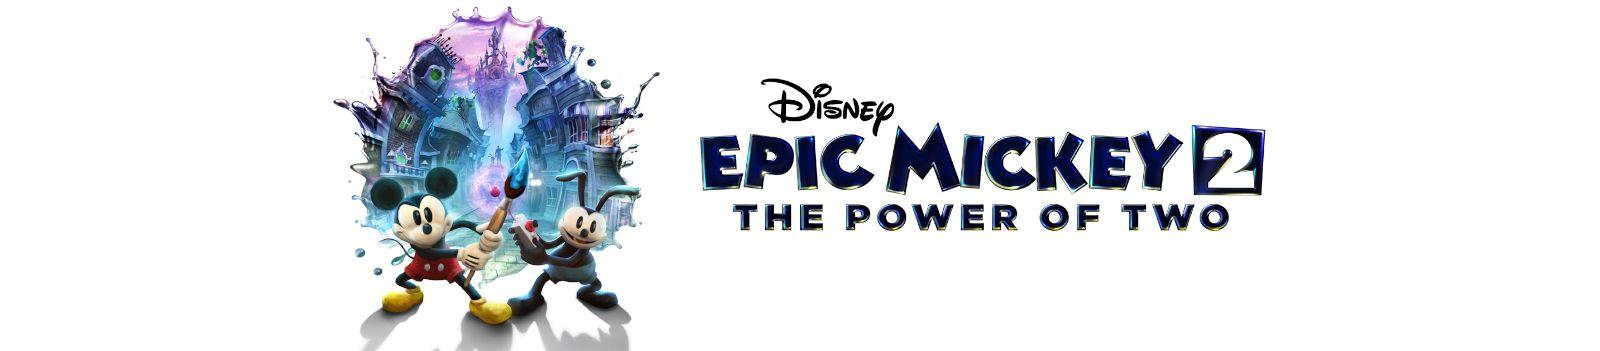 Epic Mickey 2 Logo - Etisalat UAE. Disney Epic Mickey2